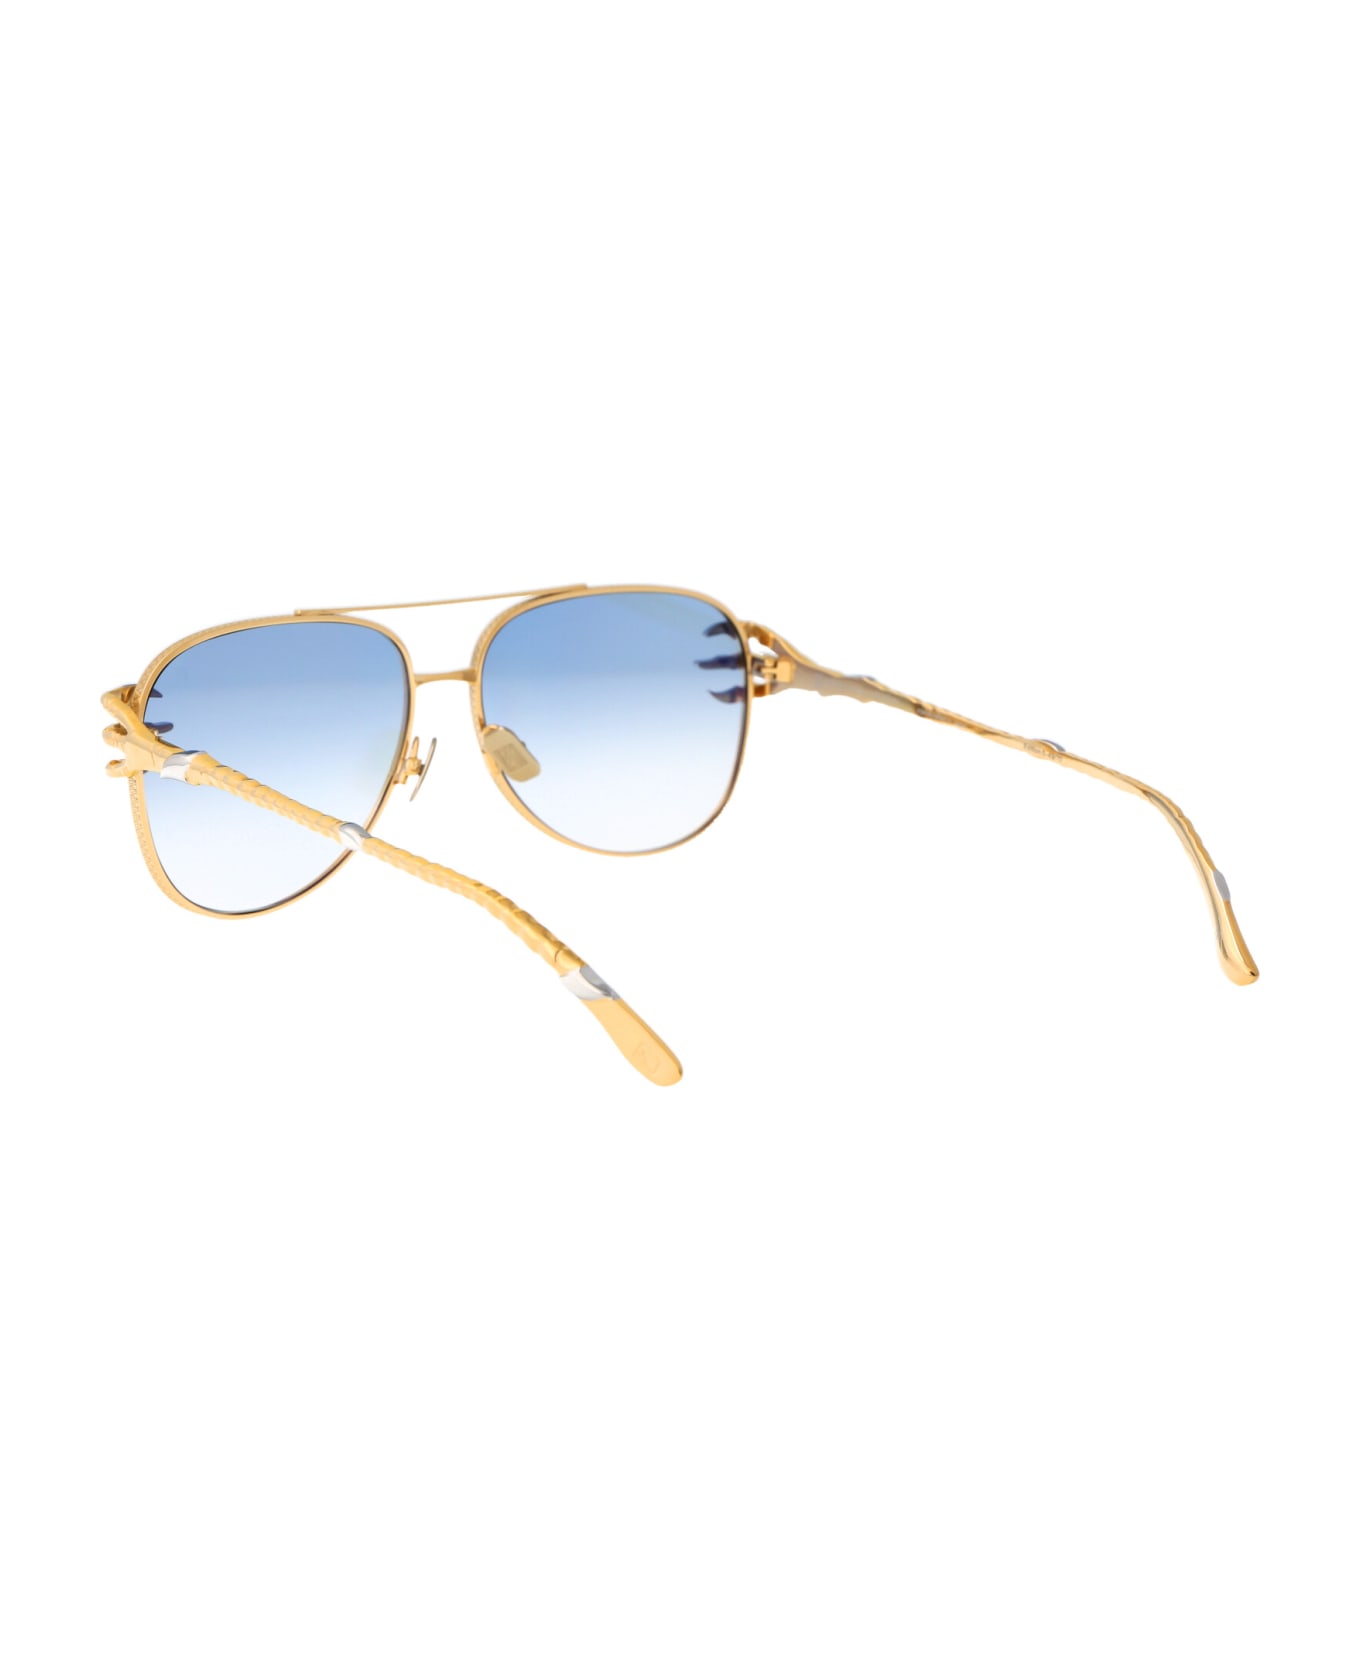 Anna-Karin Karlsson Claw Voyage Sunglasses - Zenya Squared Spotted Havana Sunglasses